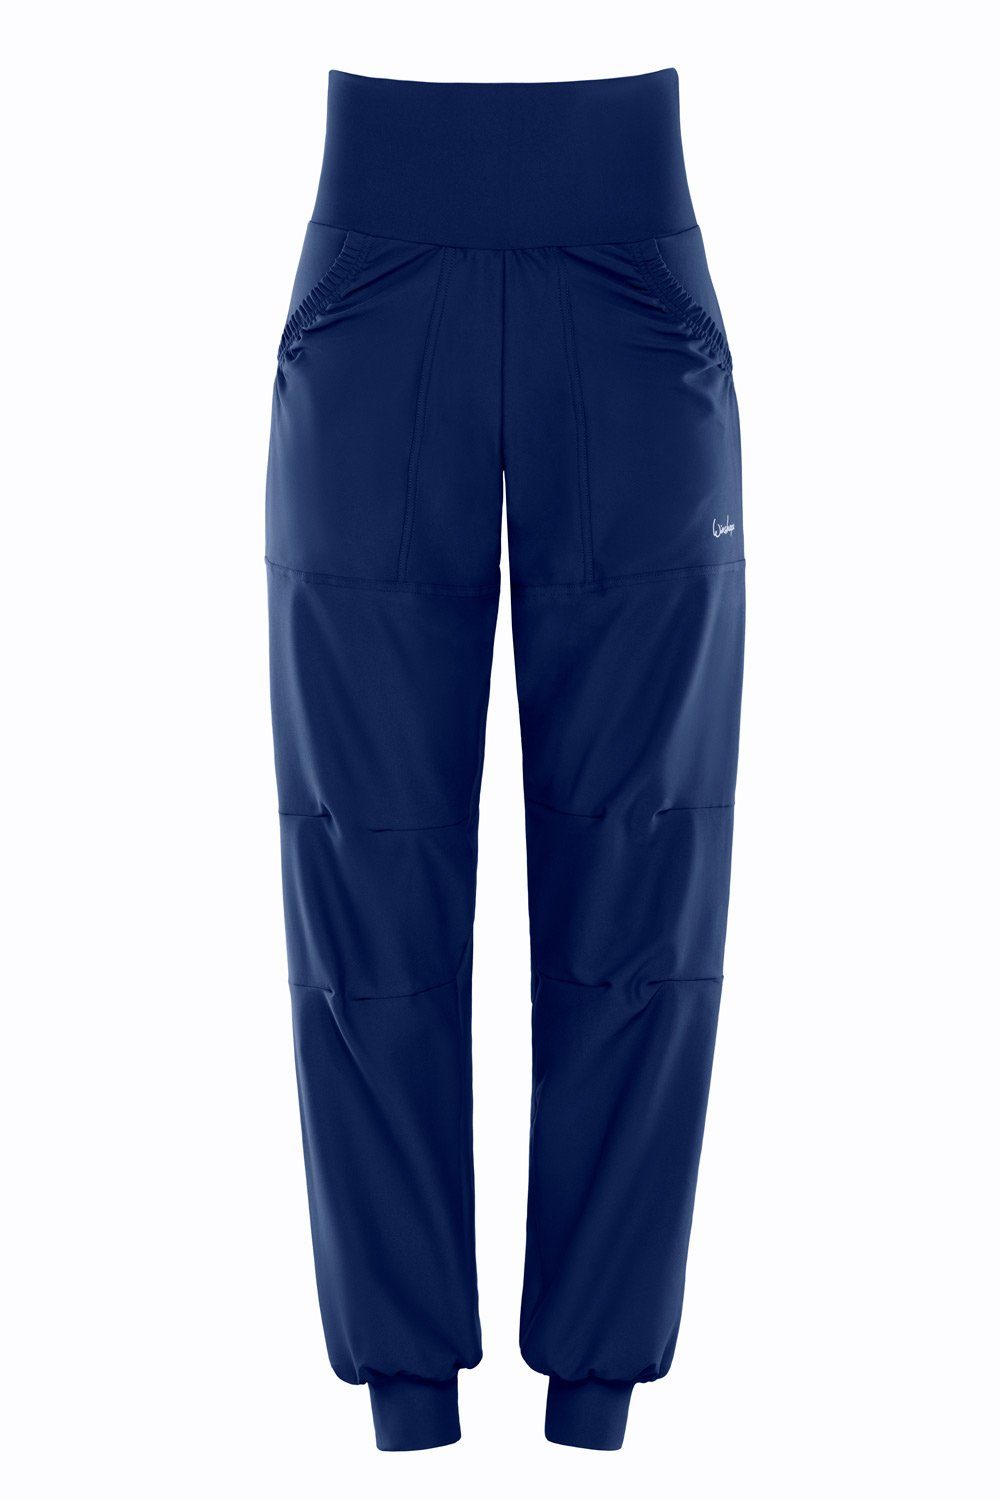 Winshape Sporthose Functional Comfort Leisure Time Trousers LEI101C High Waist dark blue | Turnhosen